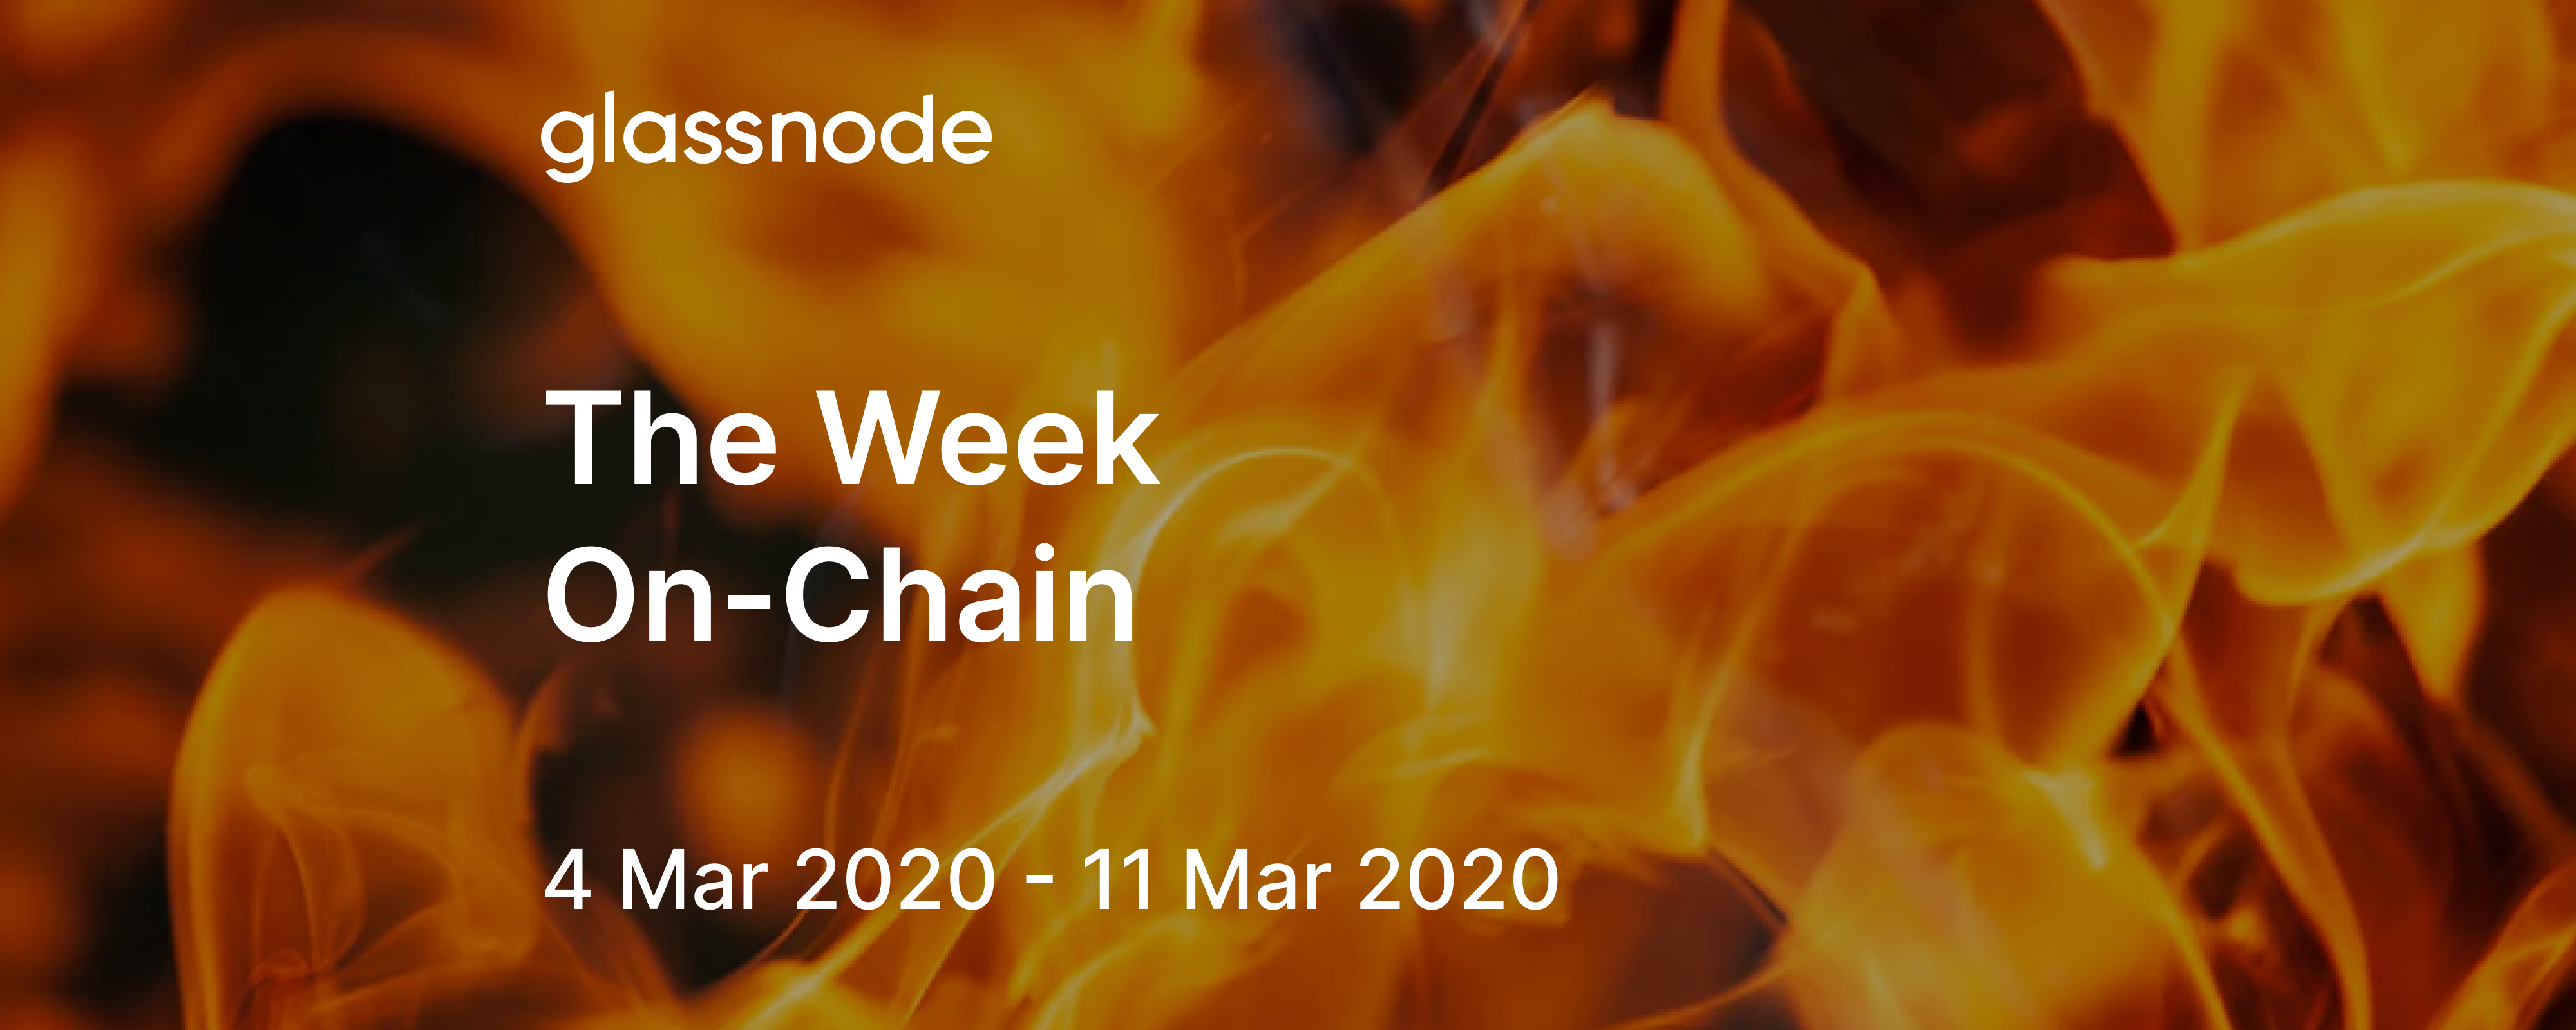 The Week On-Chain (4 Mar 2020 - 11 Mar 2020)